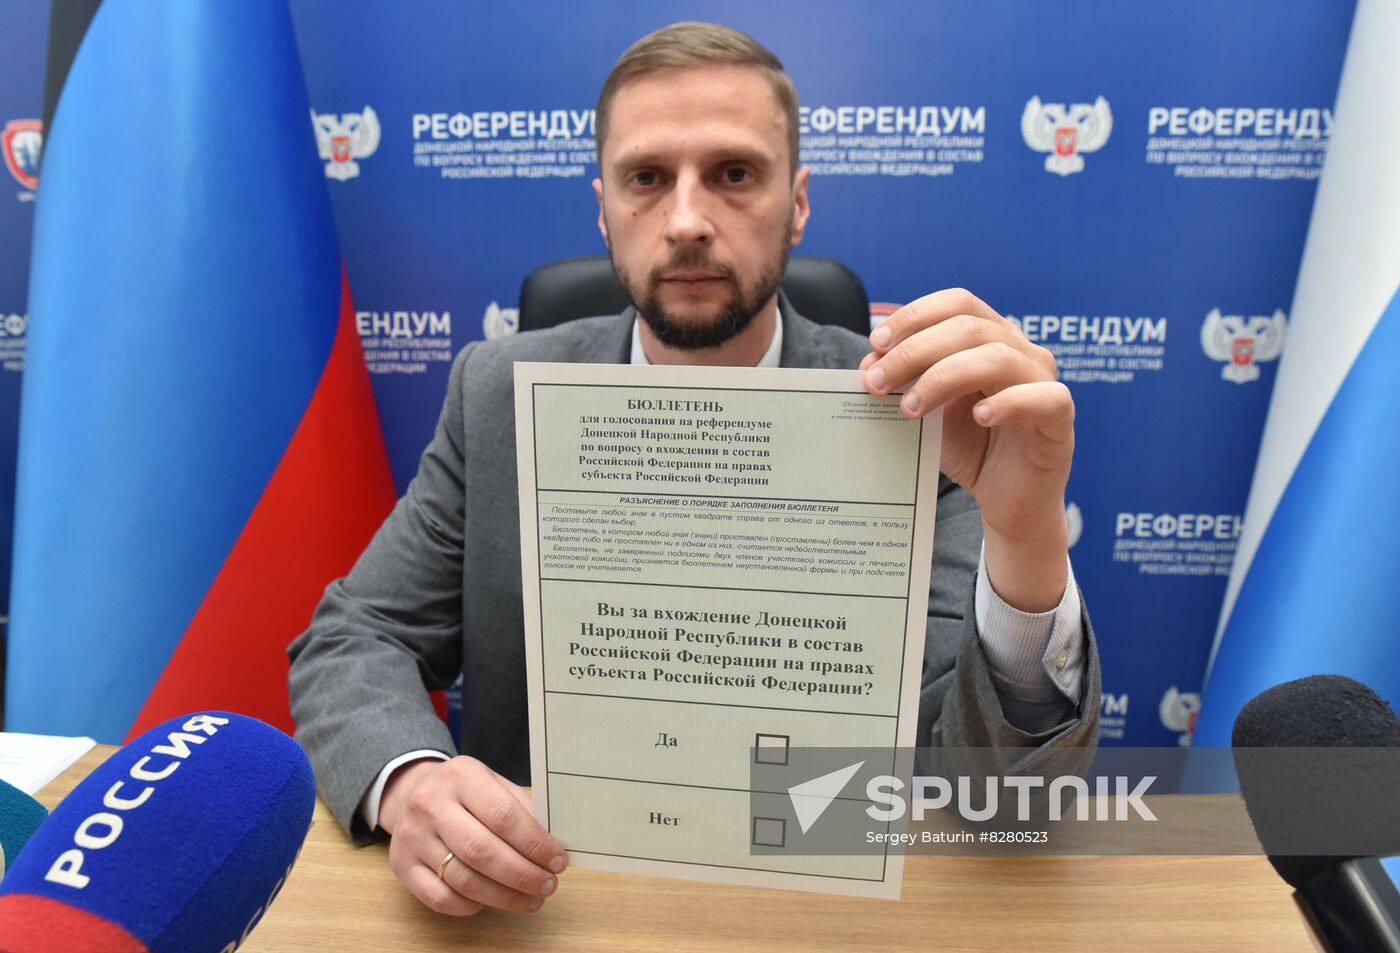 DPR LPR Ukraine Russia Joining Referendum Ballots